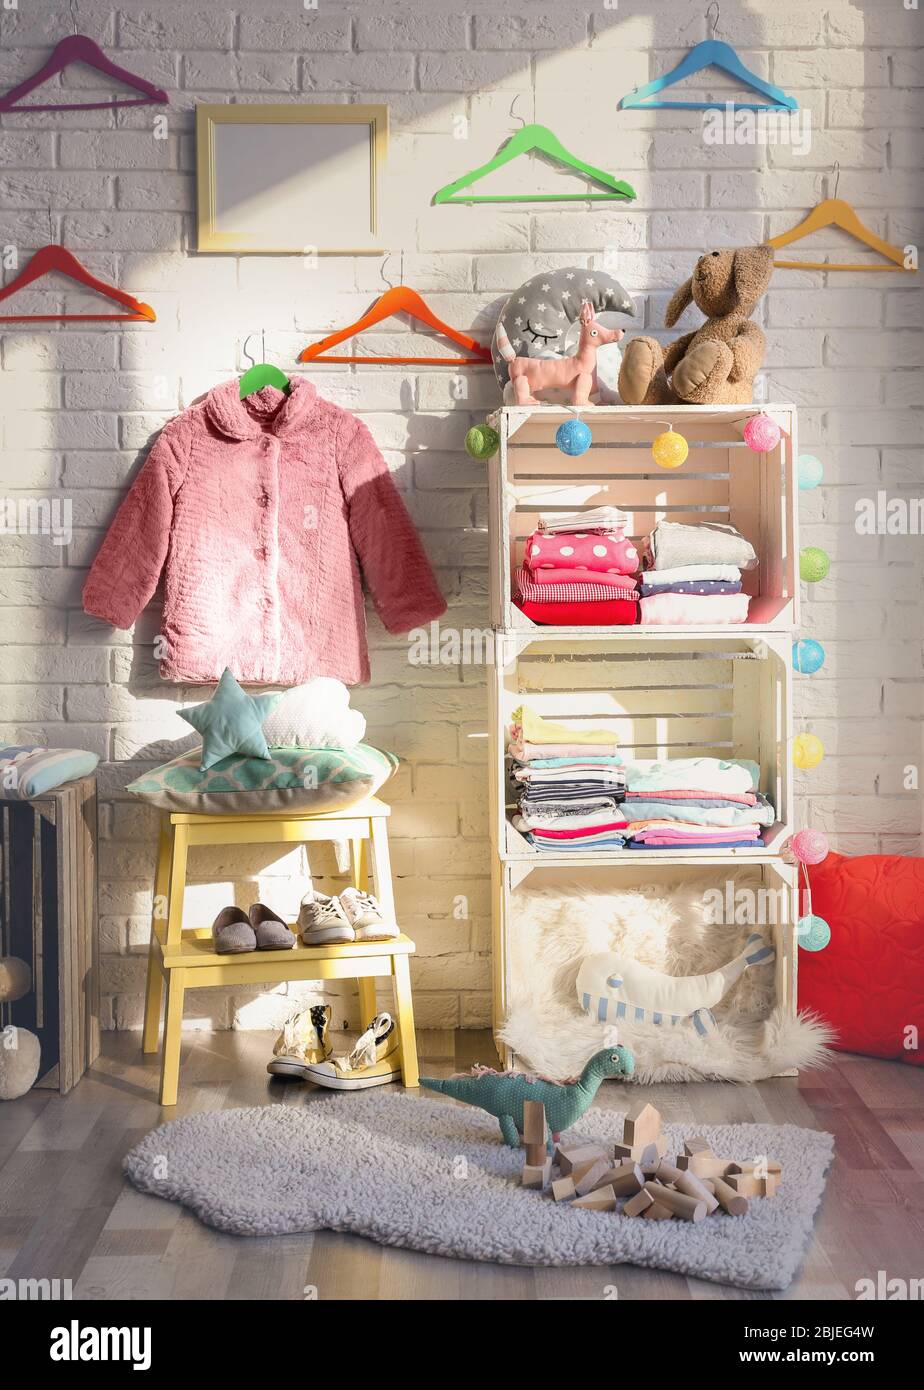 kids clothes shelf